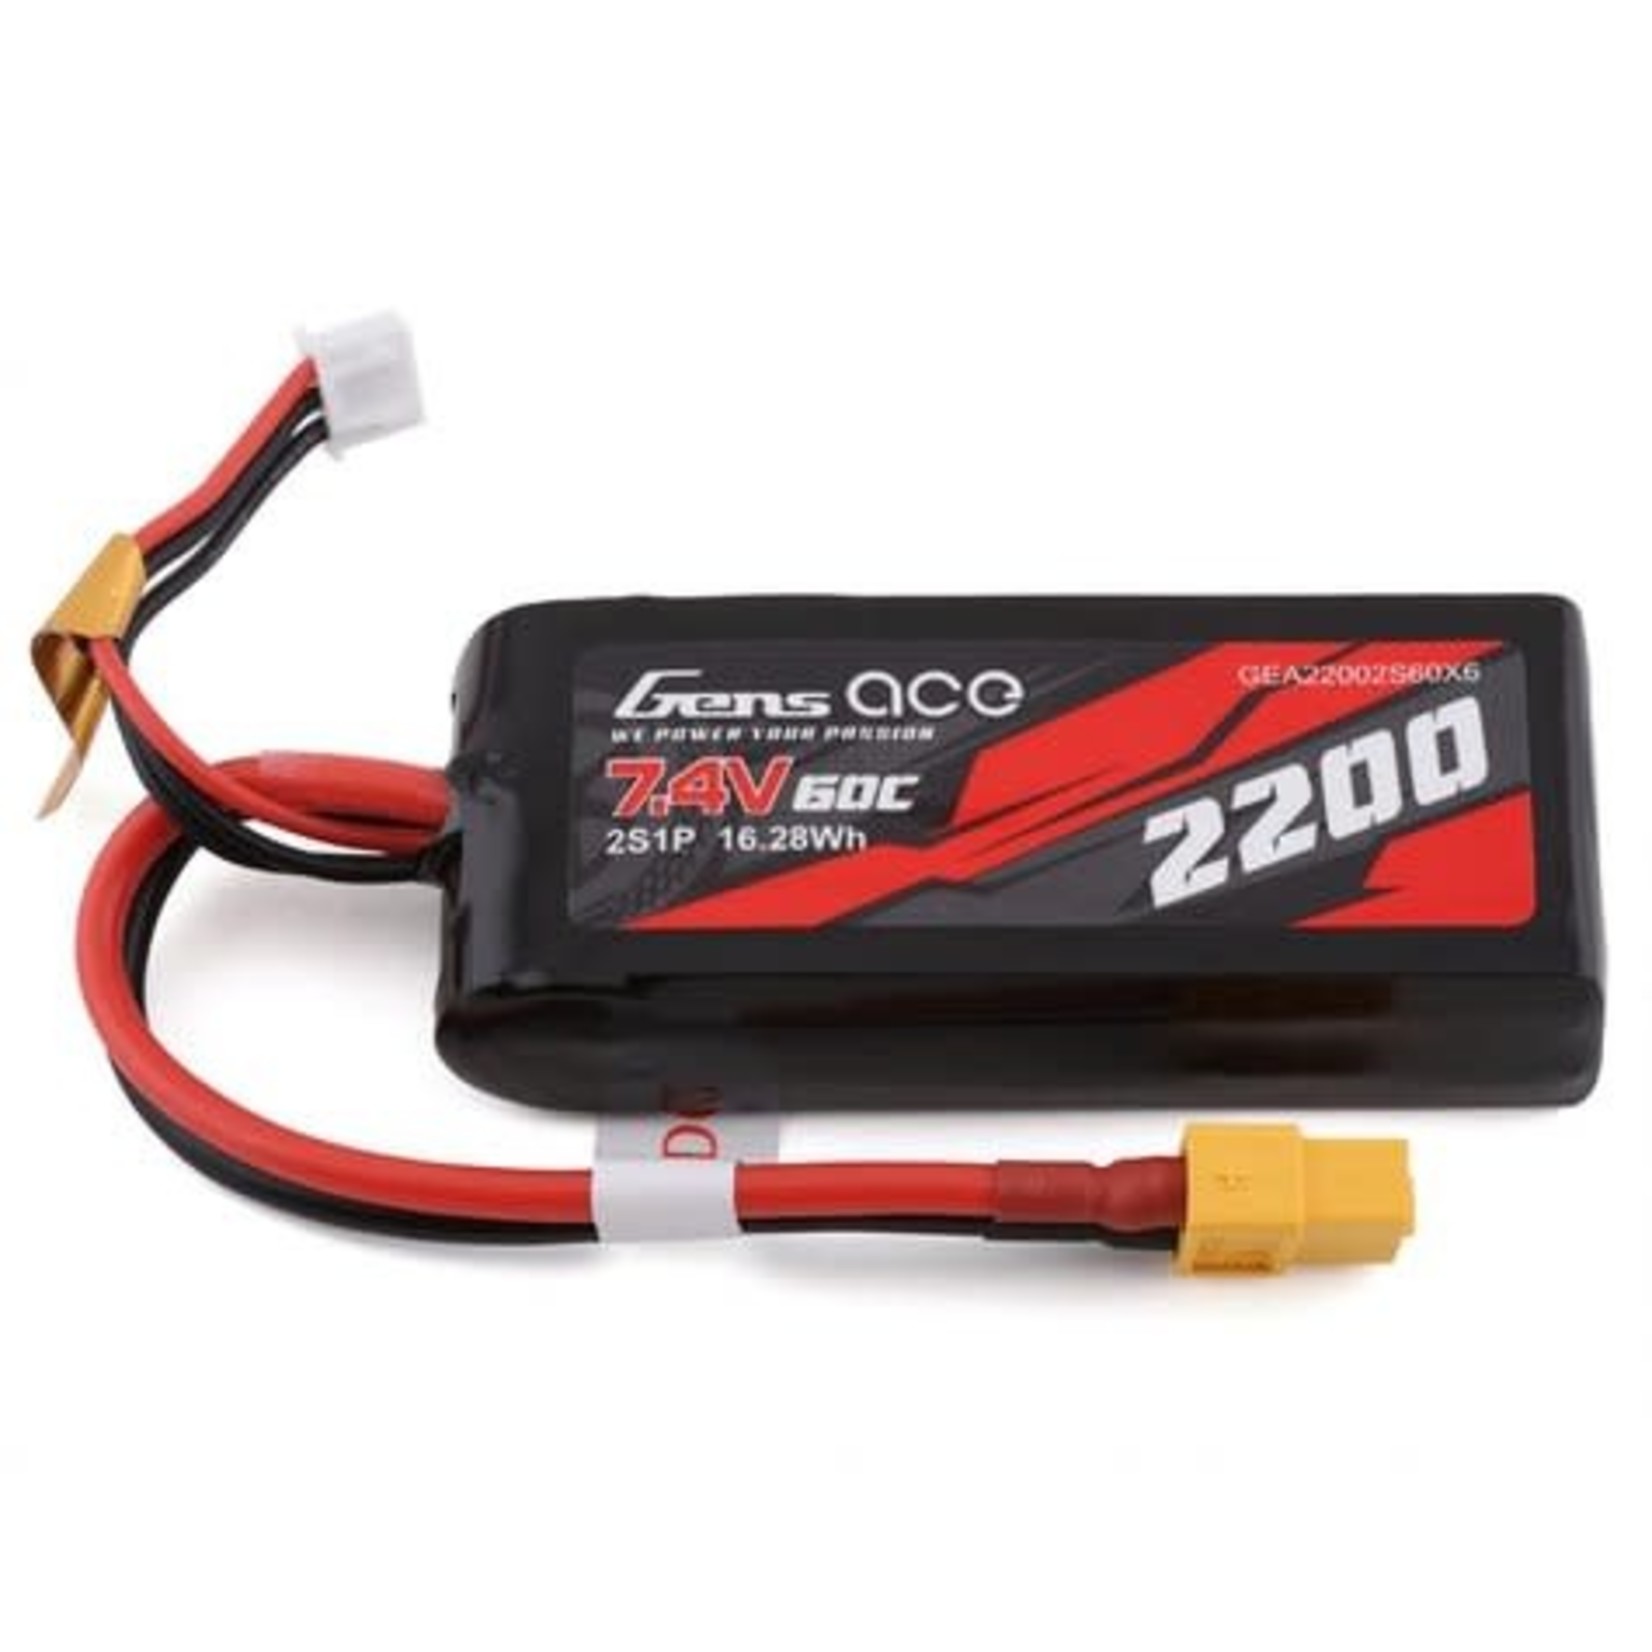 Gens Ace Gens Ace 2S LiPo Battery 60C (7.4V/2200mAh) w/XT-60 Connector #GEA22002S60X6